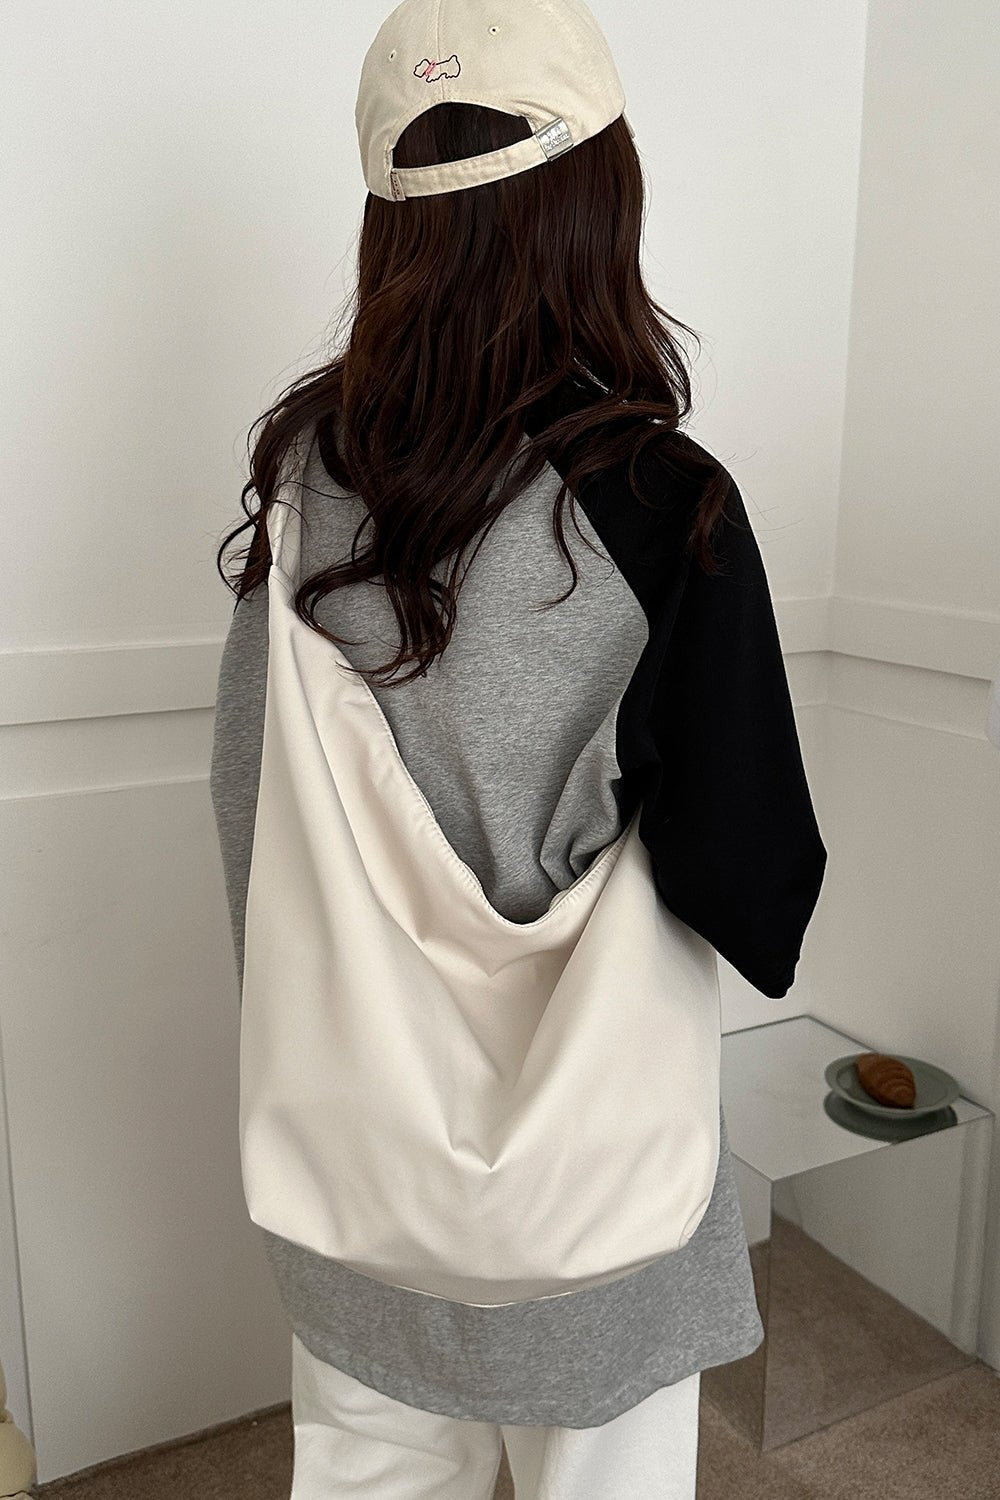 Oversize Nylon Crossbody Bag - Fashion Girl Online Store